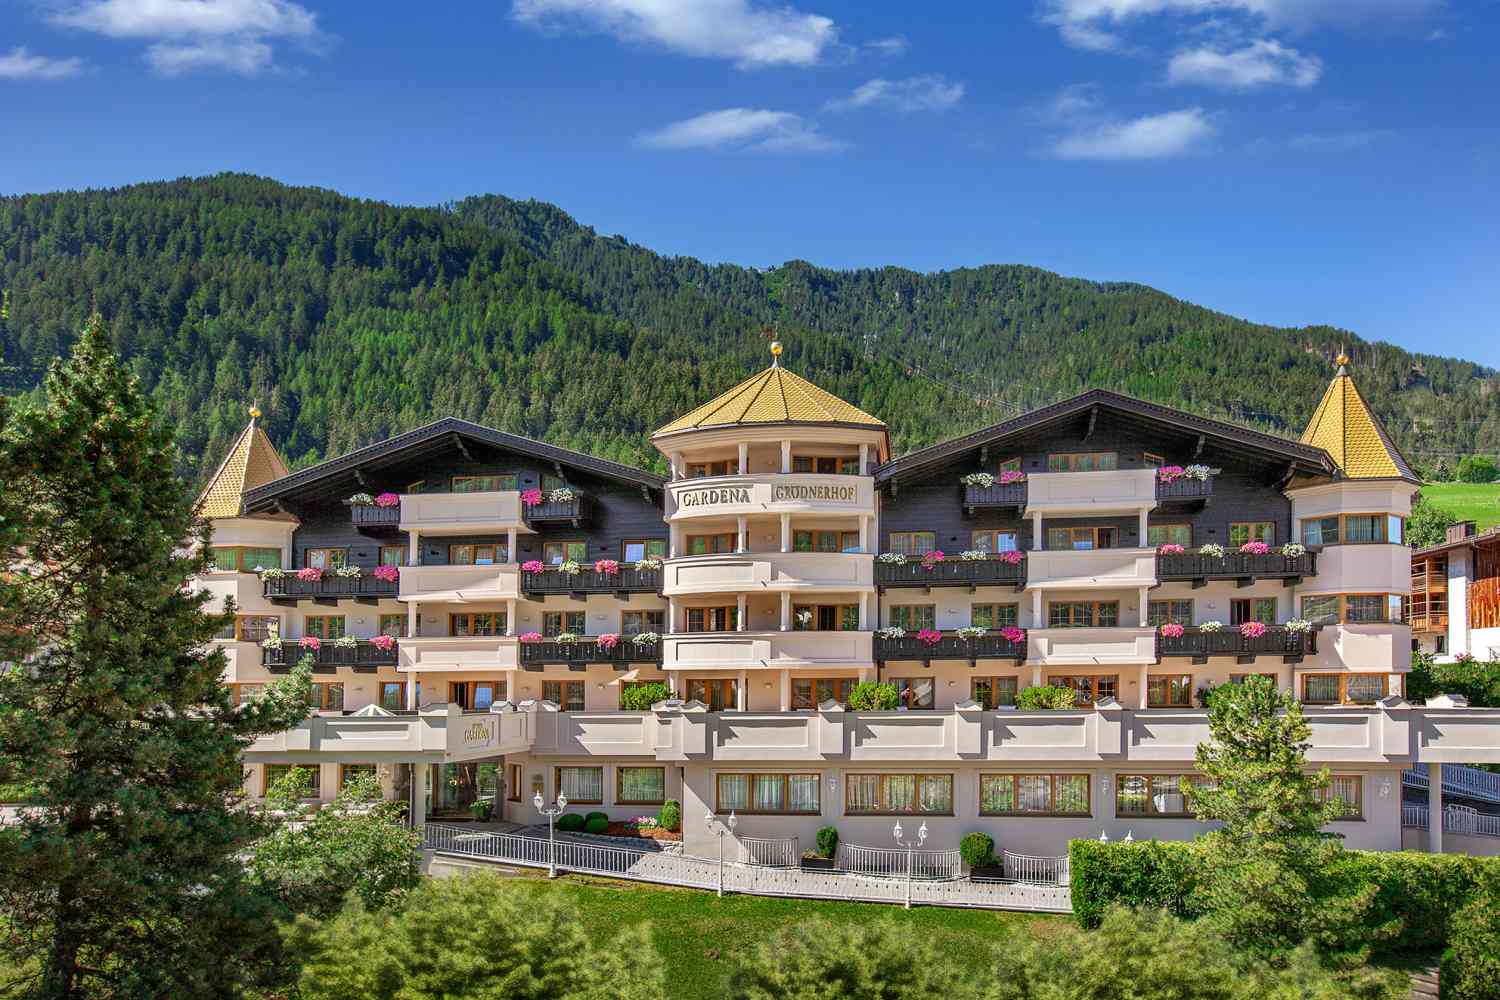 Gardena Grödnerhof Hotel & Spa Ortisei, South Tyrol - Italy